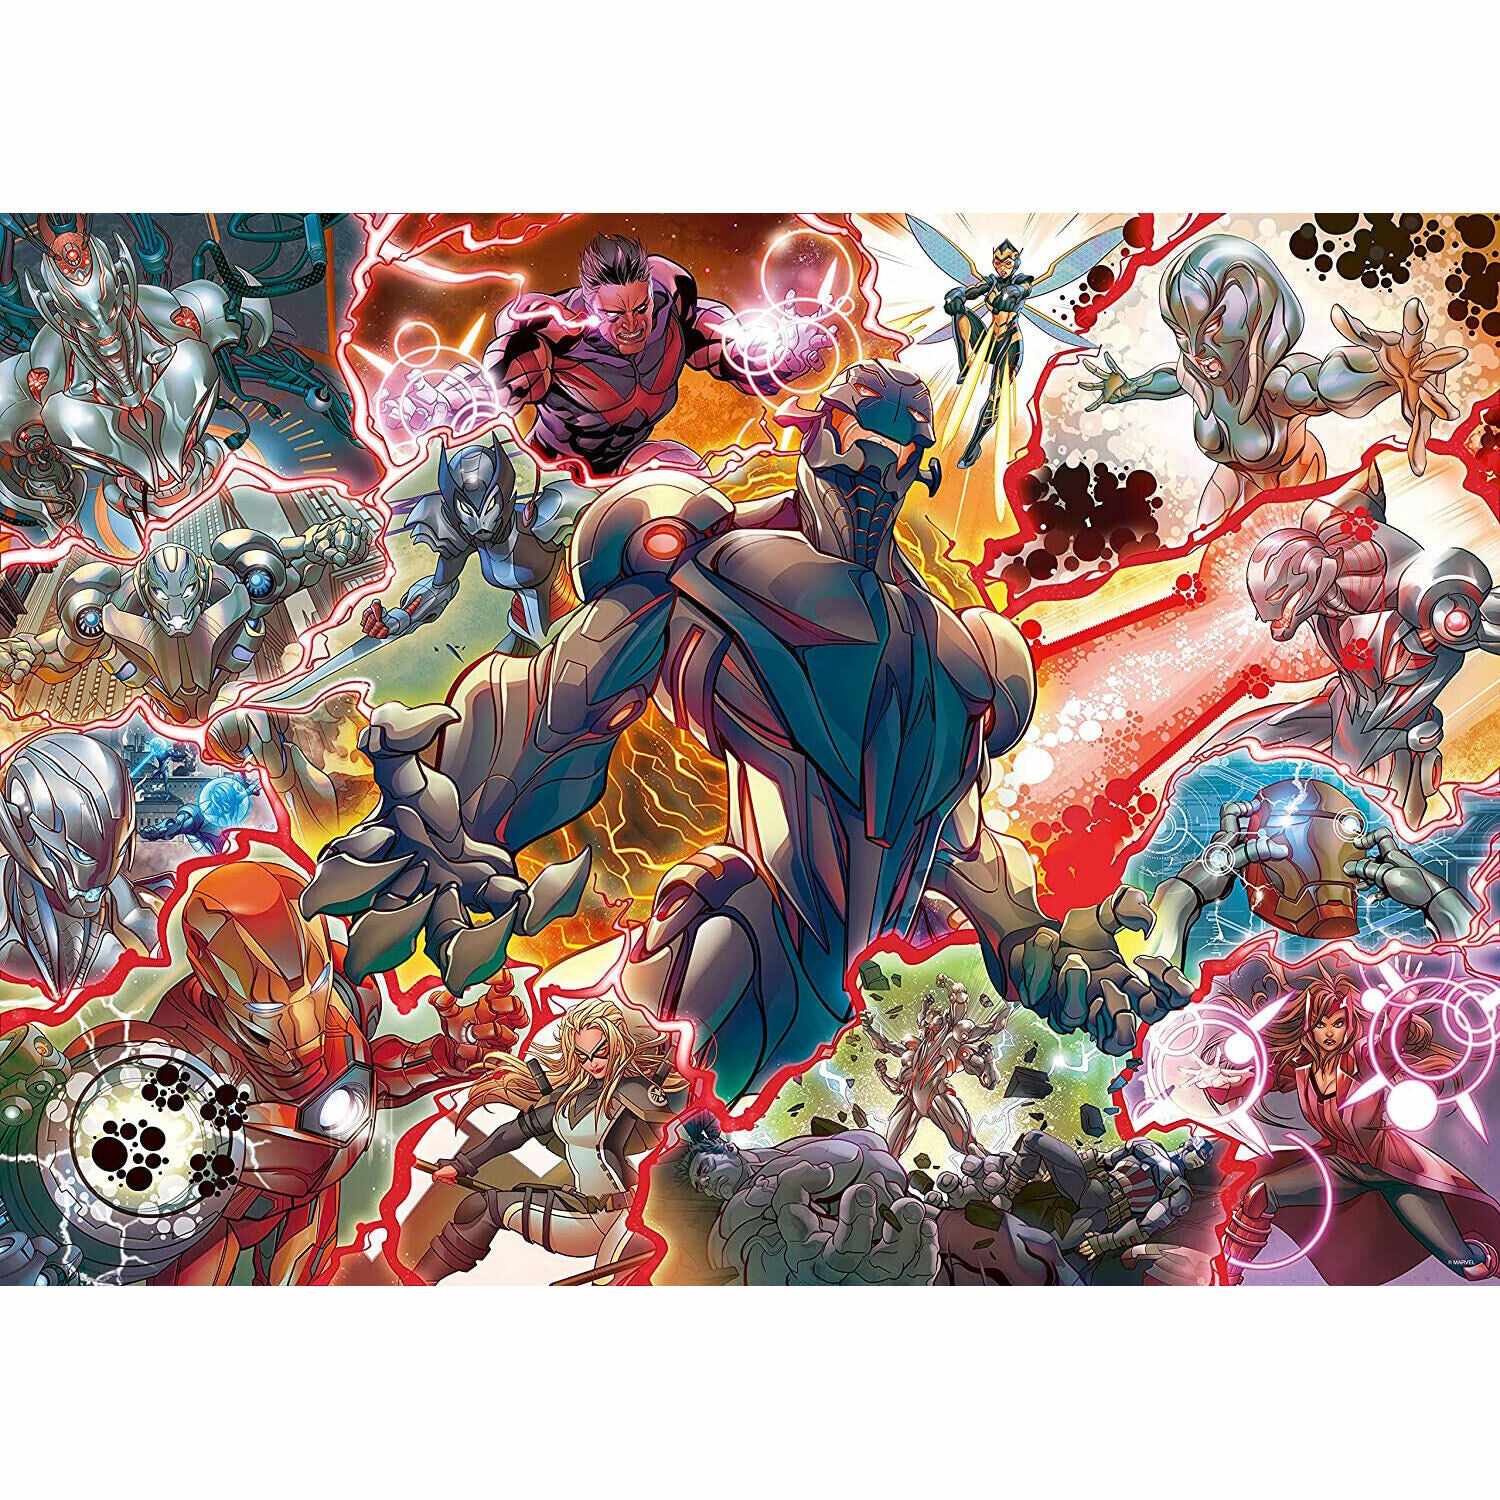 Marvel Villainous Ultron 1000 Piece Puzzle by Ravensburger - Brand New